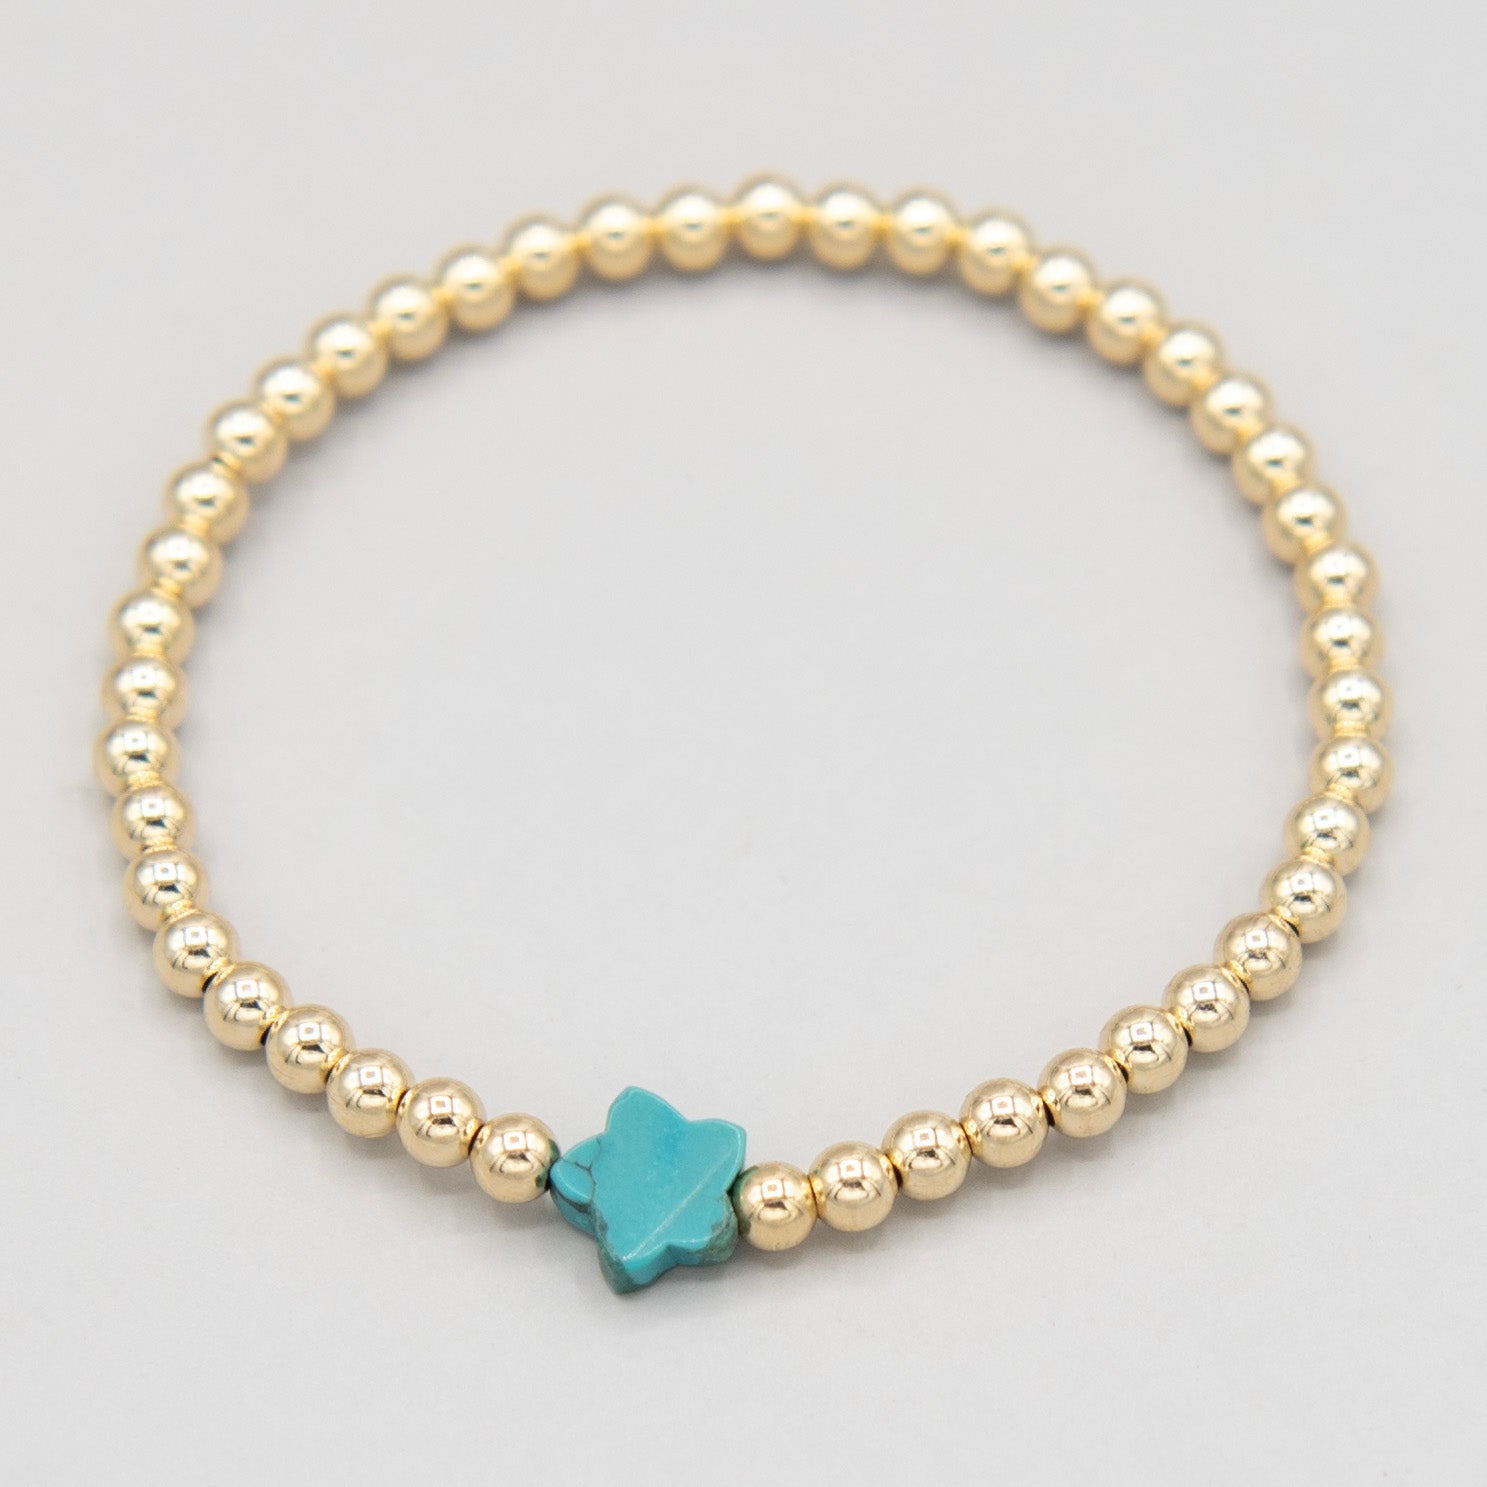 4mm Beaded Lux Turquoise Star Bracelet